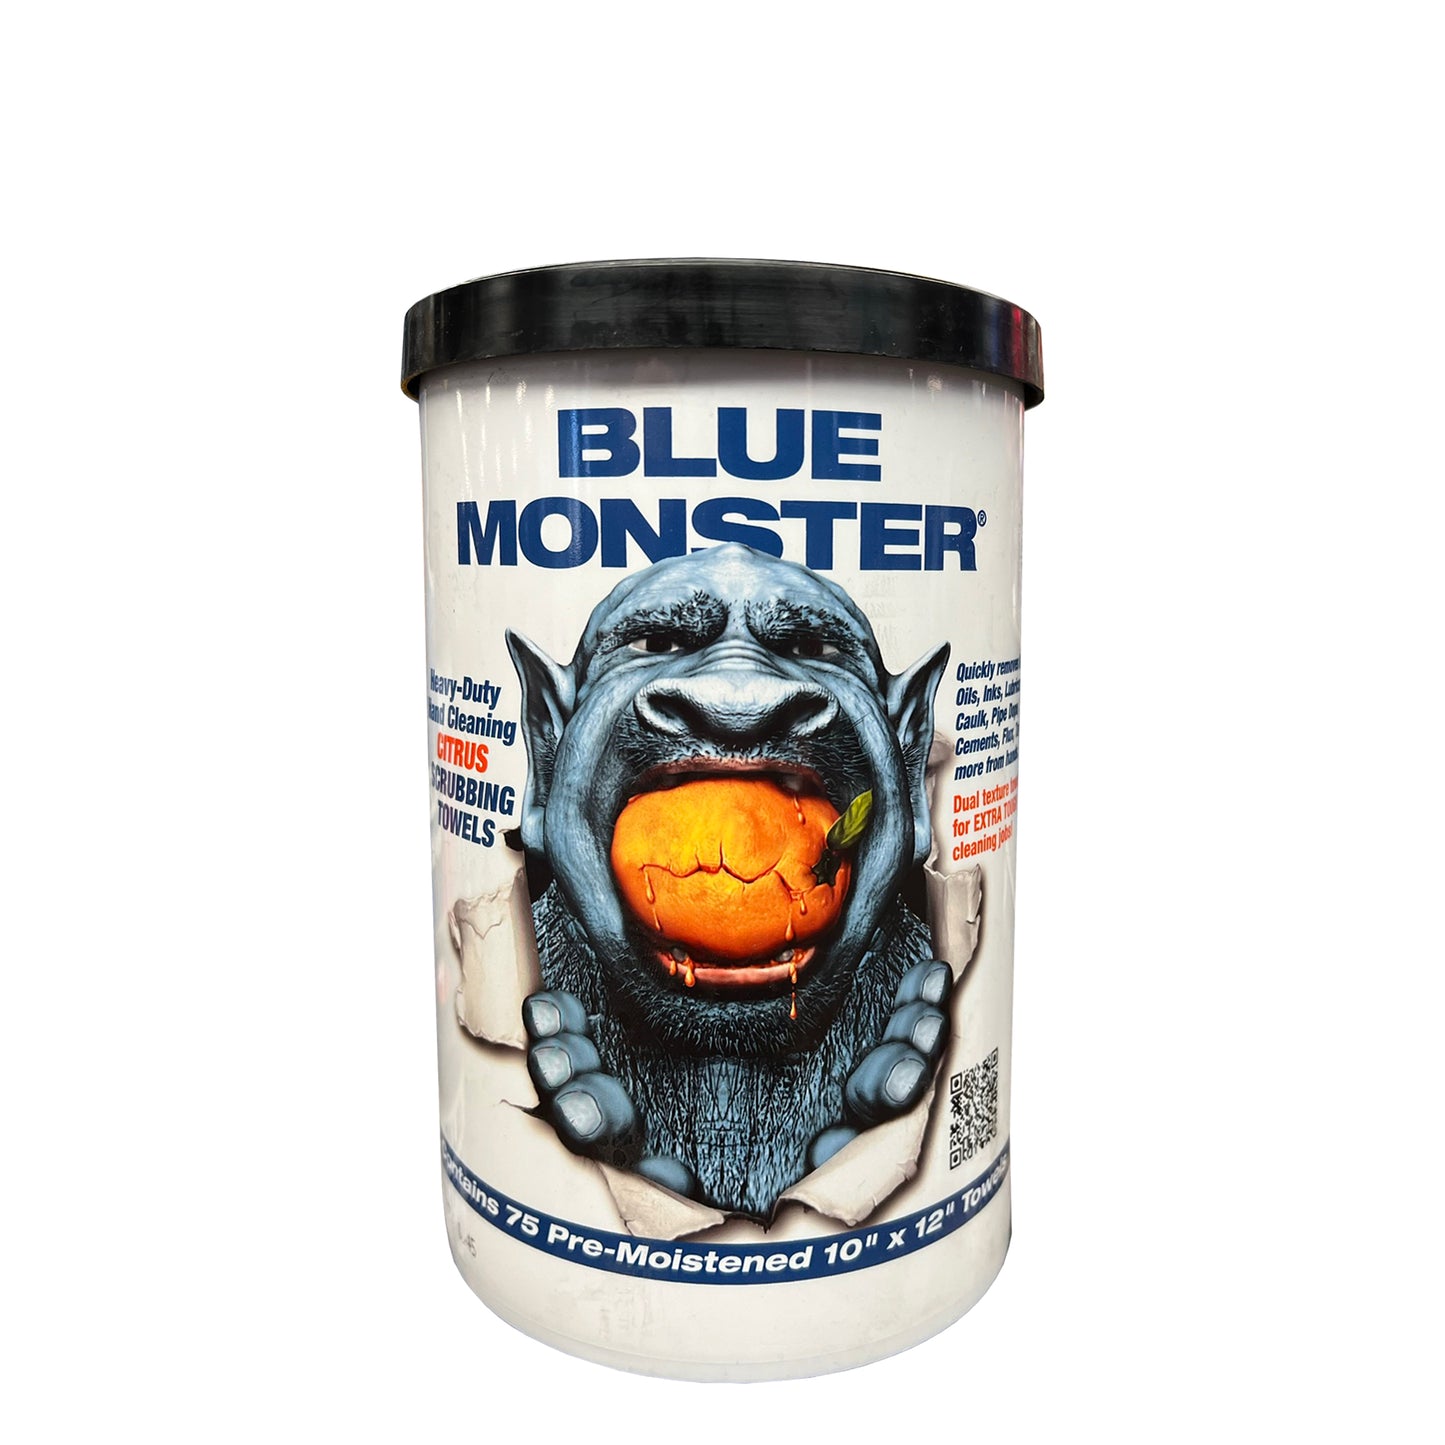 77095 - Blue Monster Heavy-Duty Citrus Scrubbing Towels - 75 Count